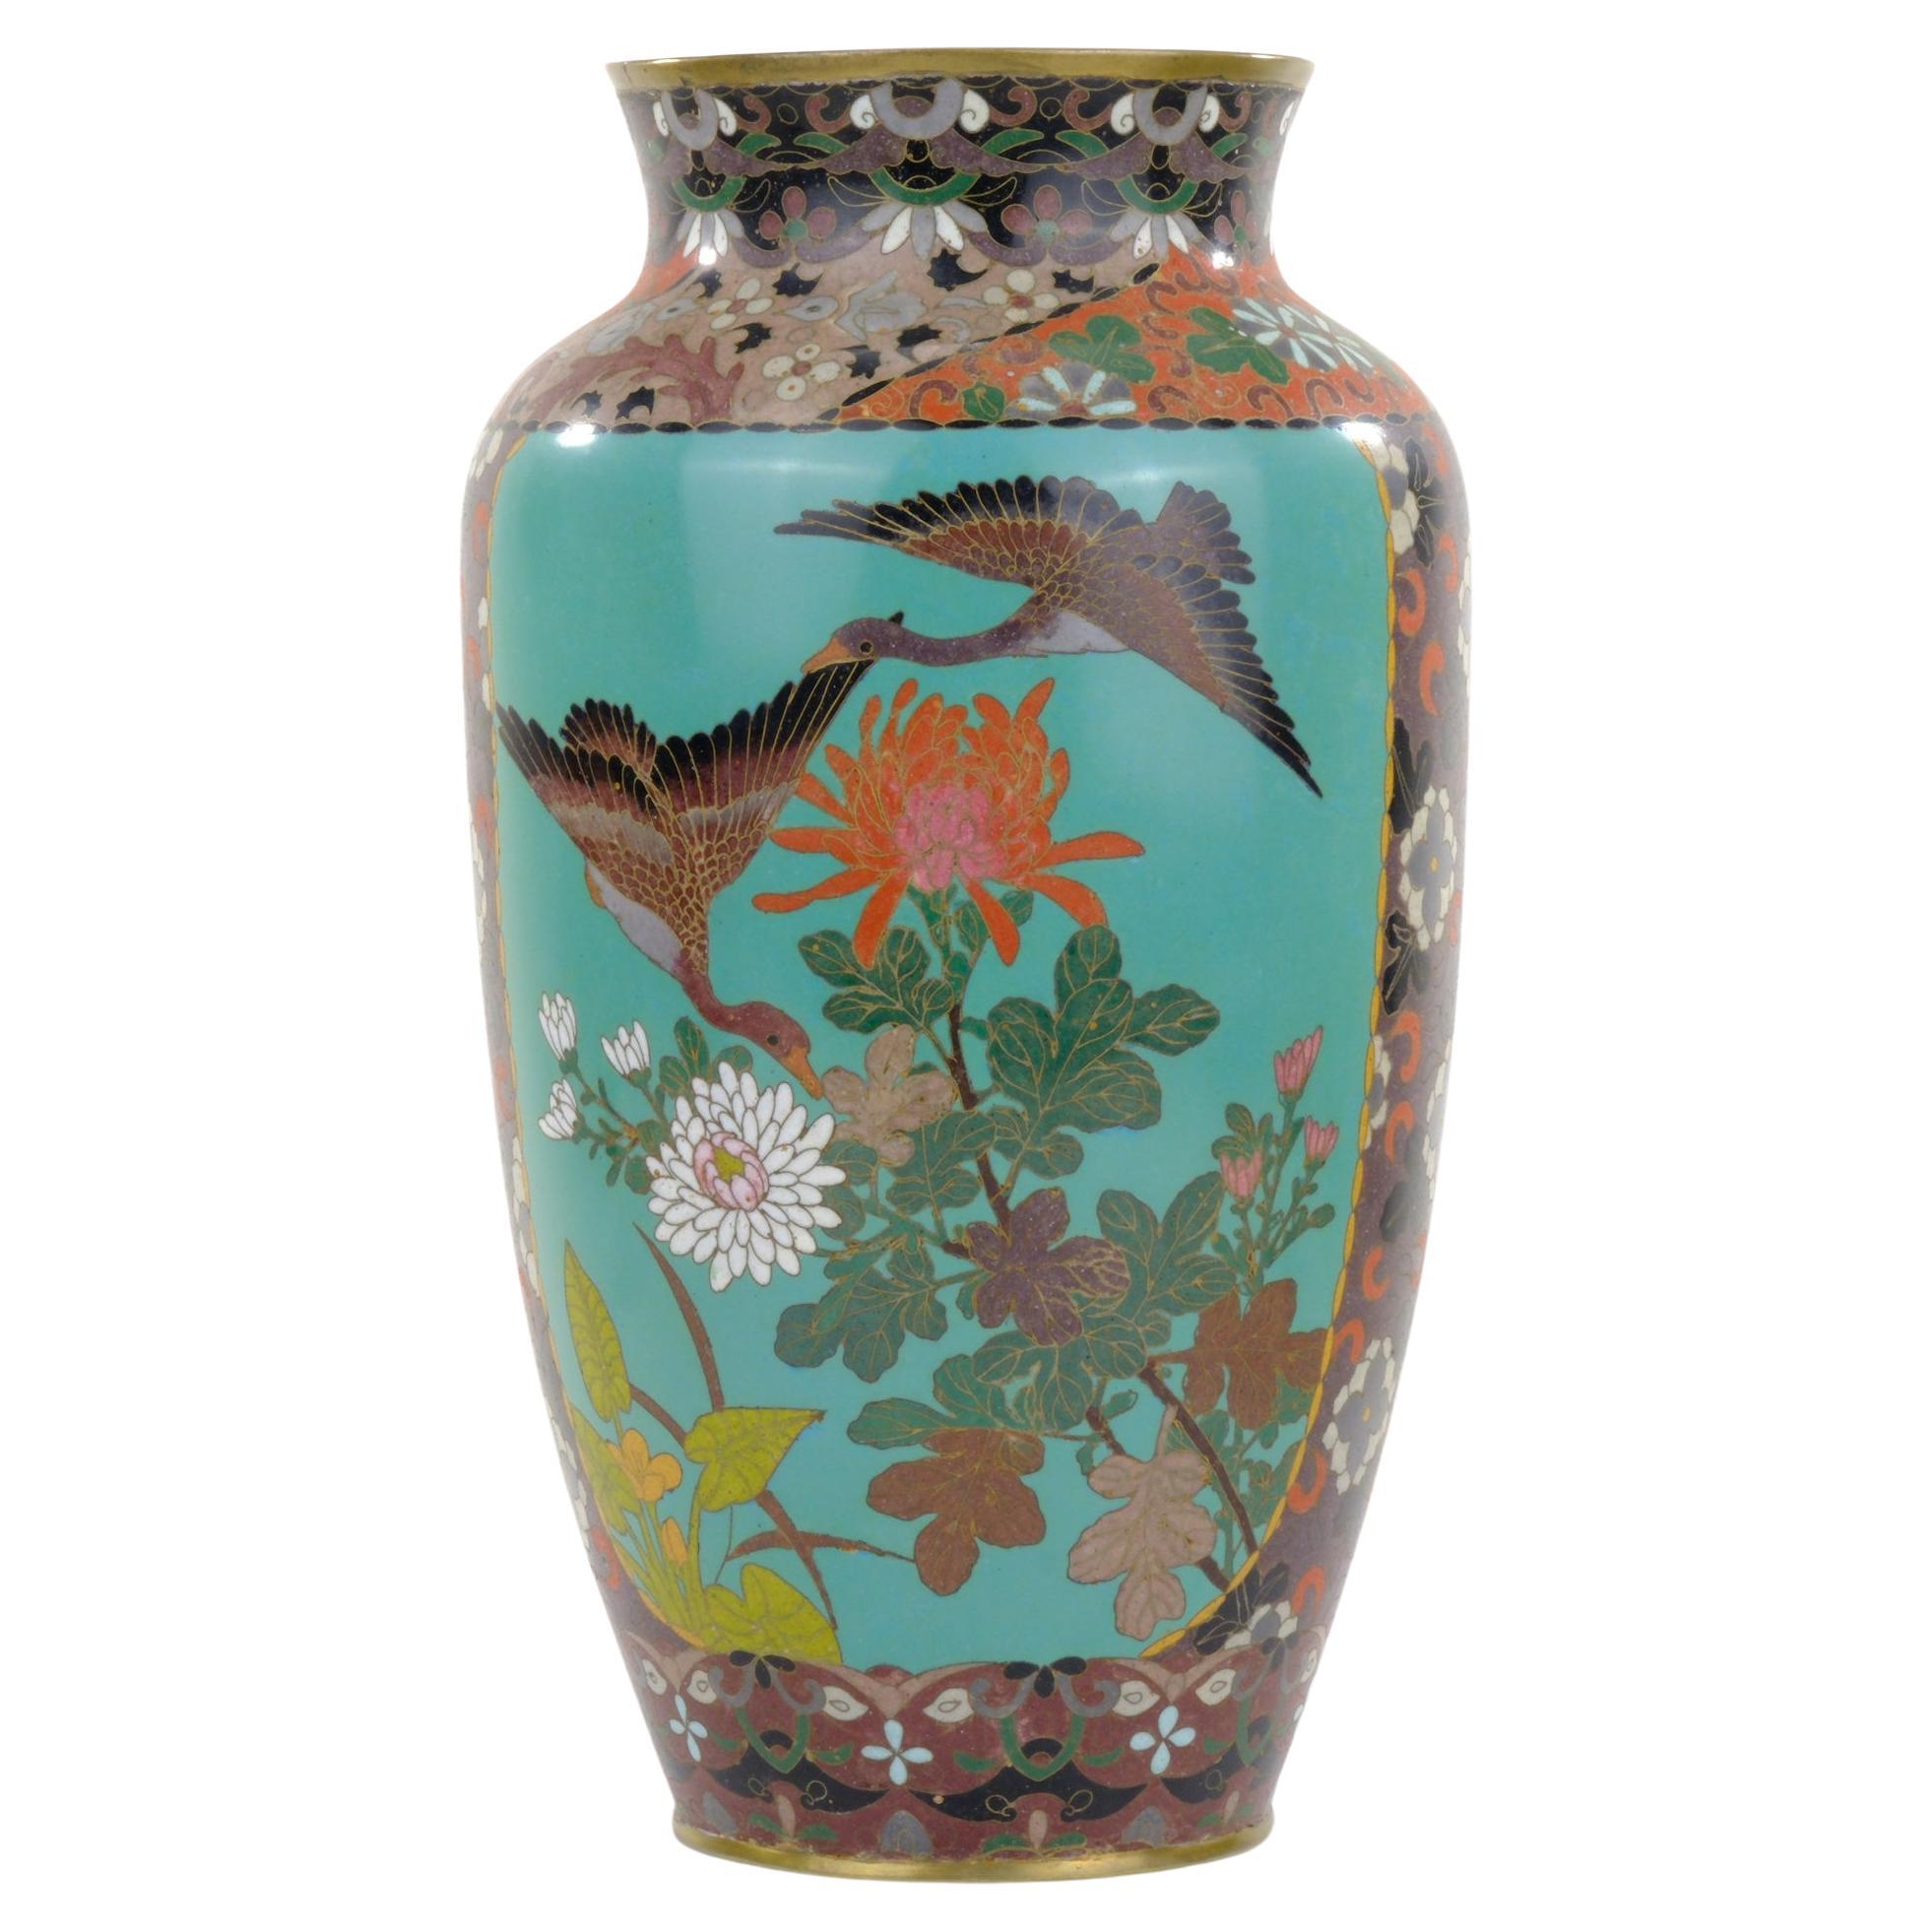 Antique Japanese Meiji Era (c1880) Cloisonné Vase Geese in Flight & Flowers 12”